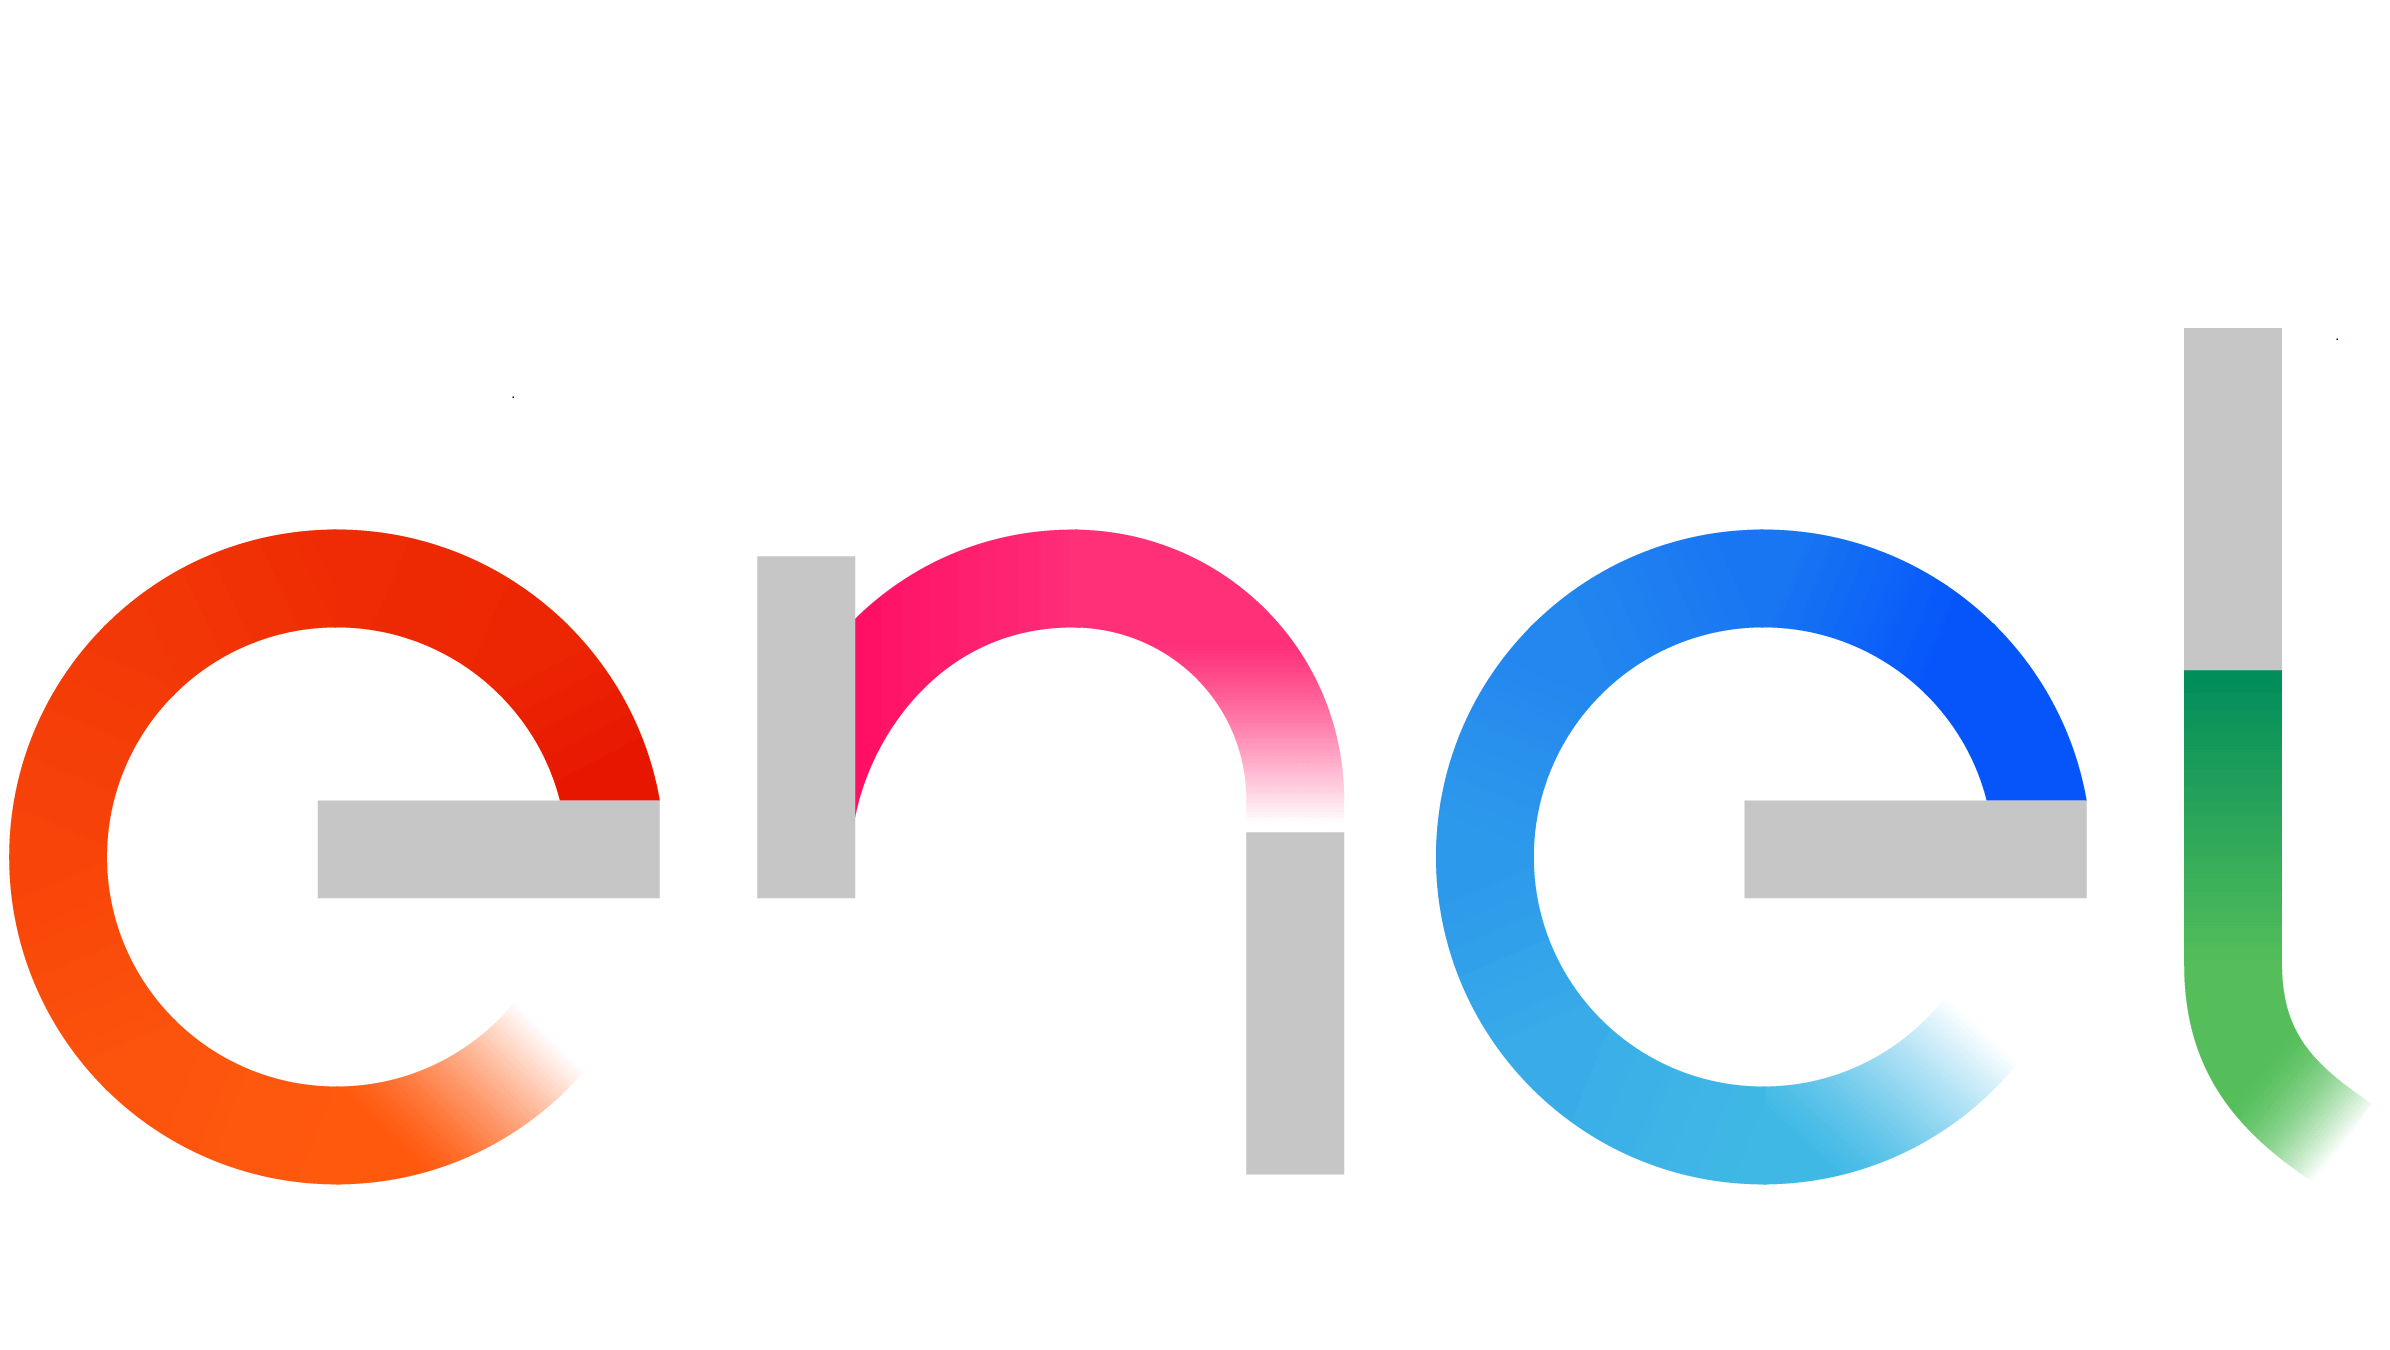 Enel Logo - Index of /wp-content/uploads/2015/06